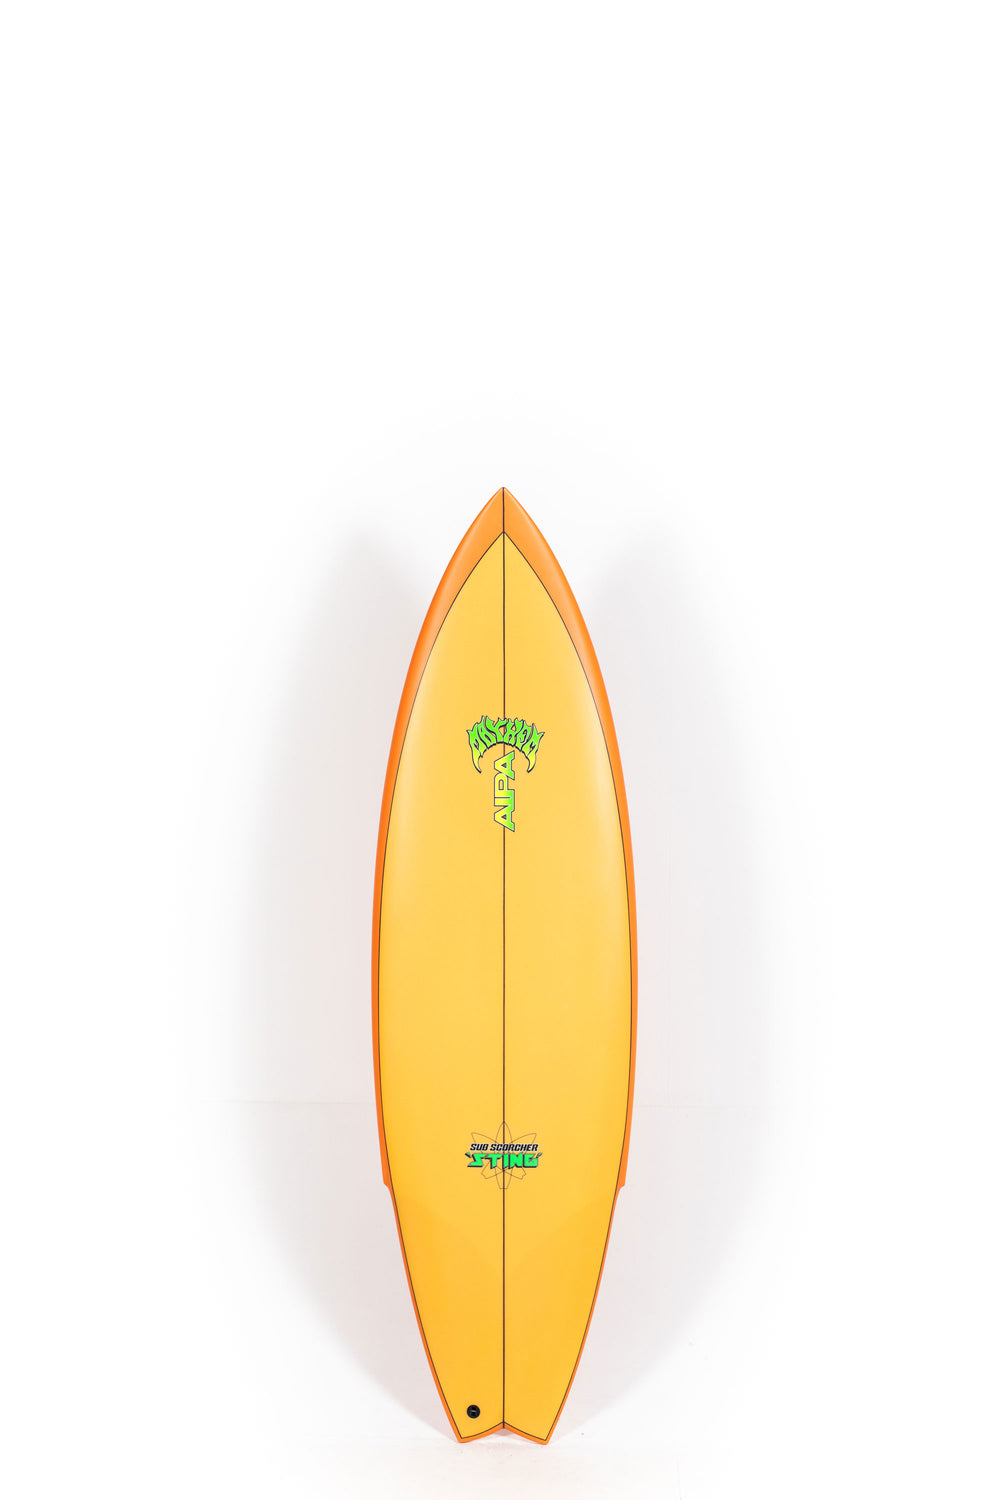 Pukas Surf Shop - Lost Surfboard - SUB SCORCHER STING by Mayhem x Brink - 6’1” x 20,75